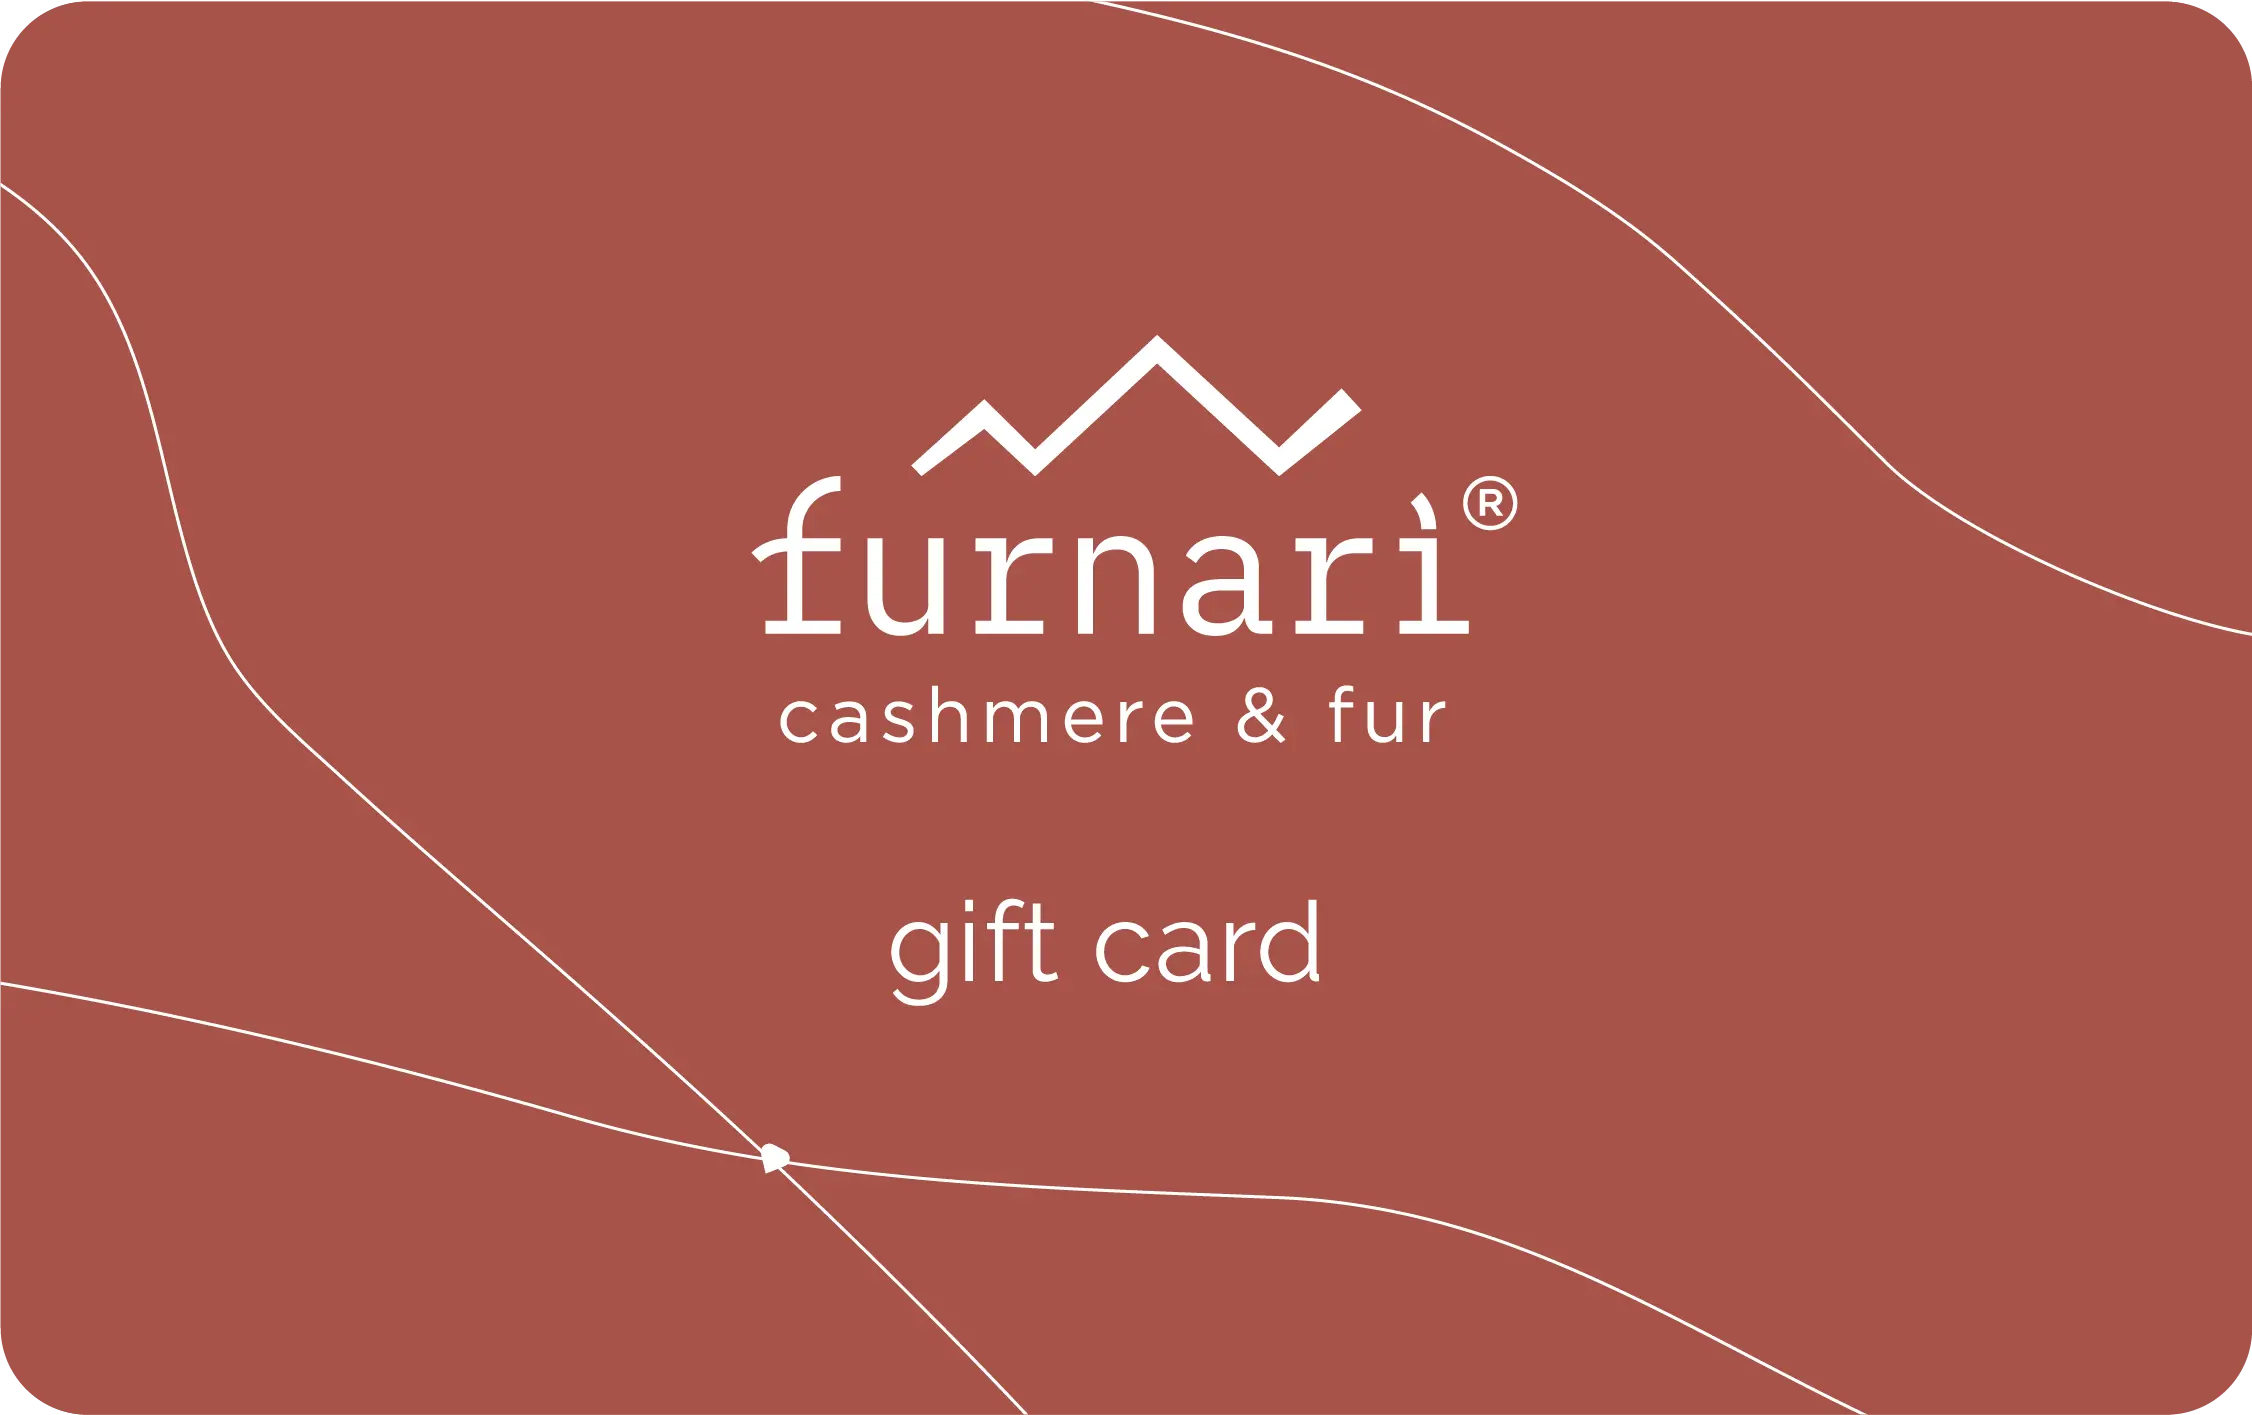 YOUR FURNARI GIFT CARD